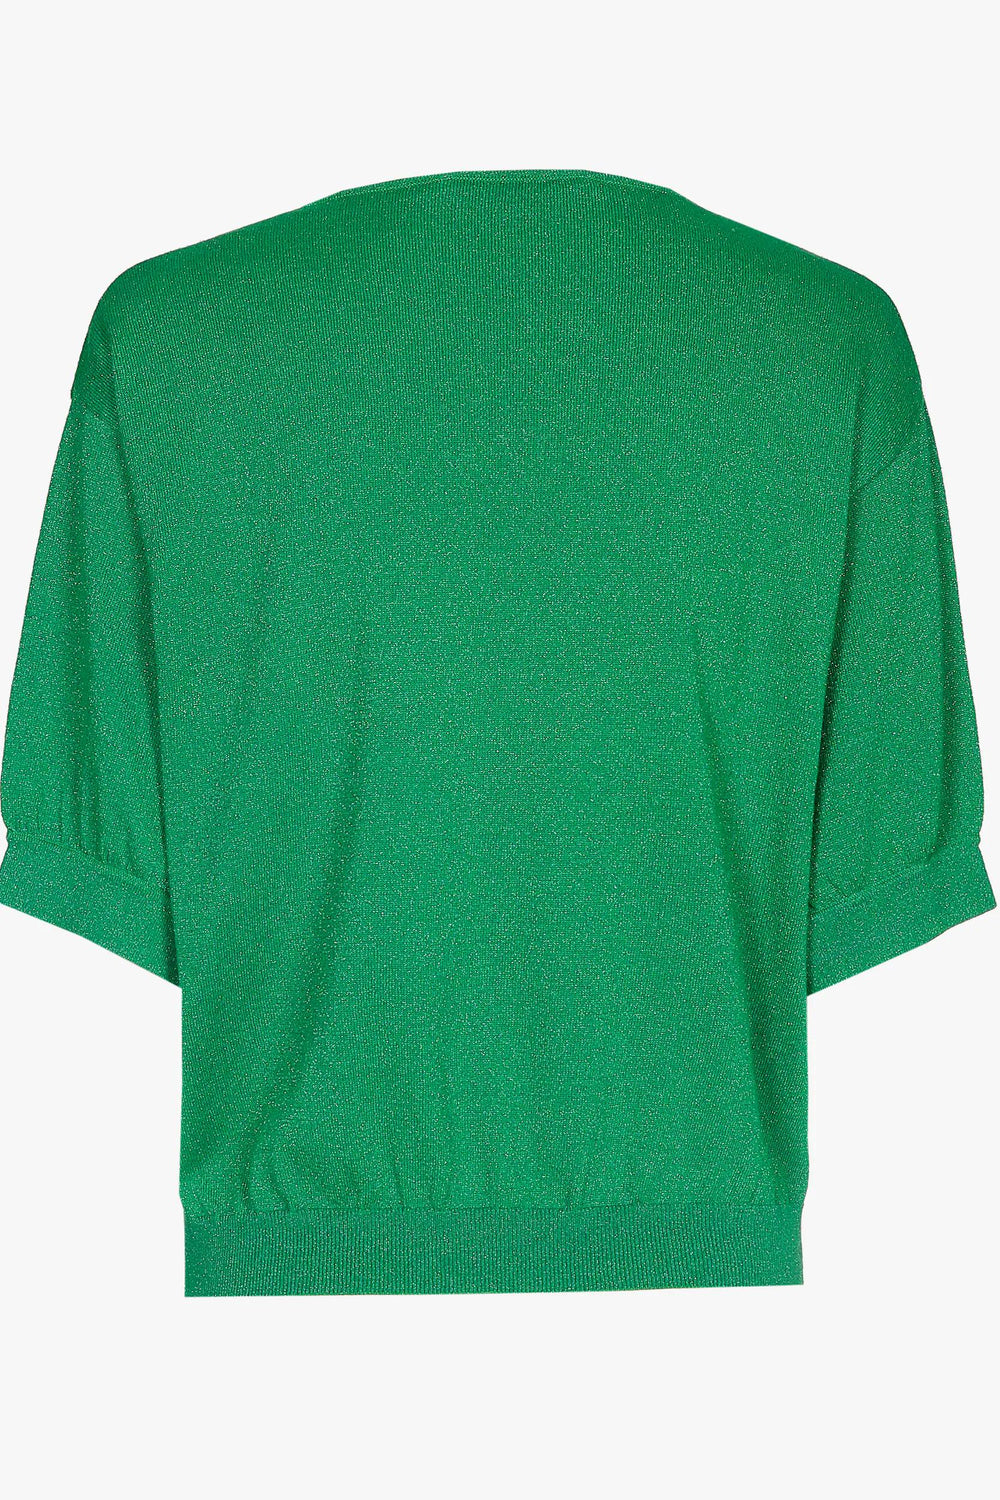 Irish green pulletje met lurex glansdraad - xandres - gulsum-groen - grote maten - dameskleding - kledingwinkel - herent - leuven